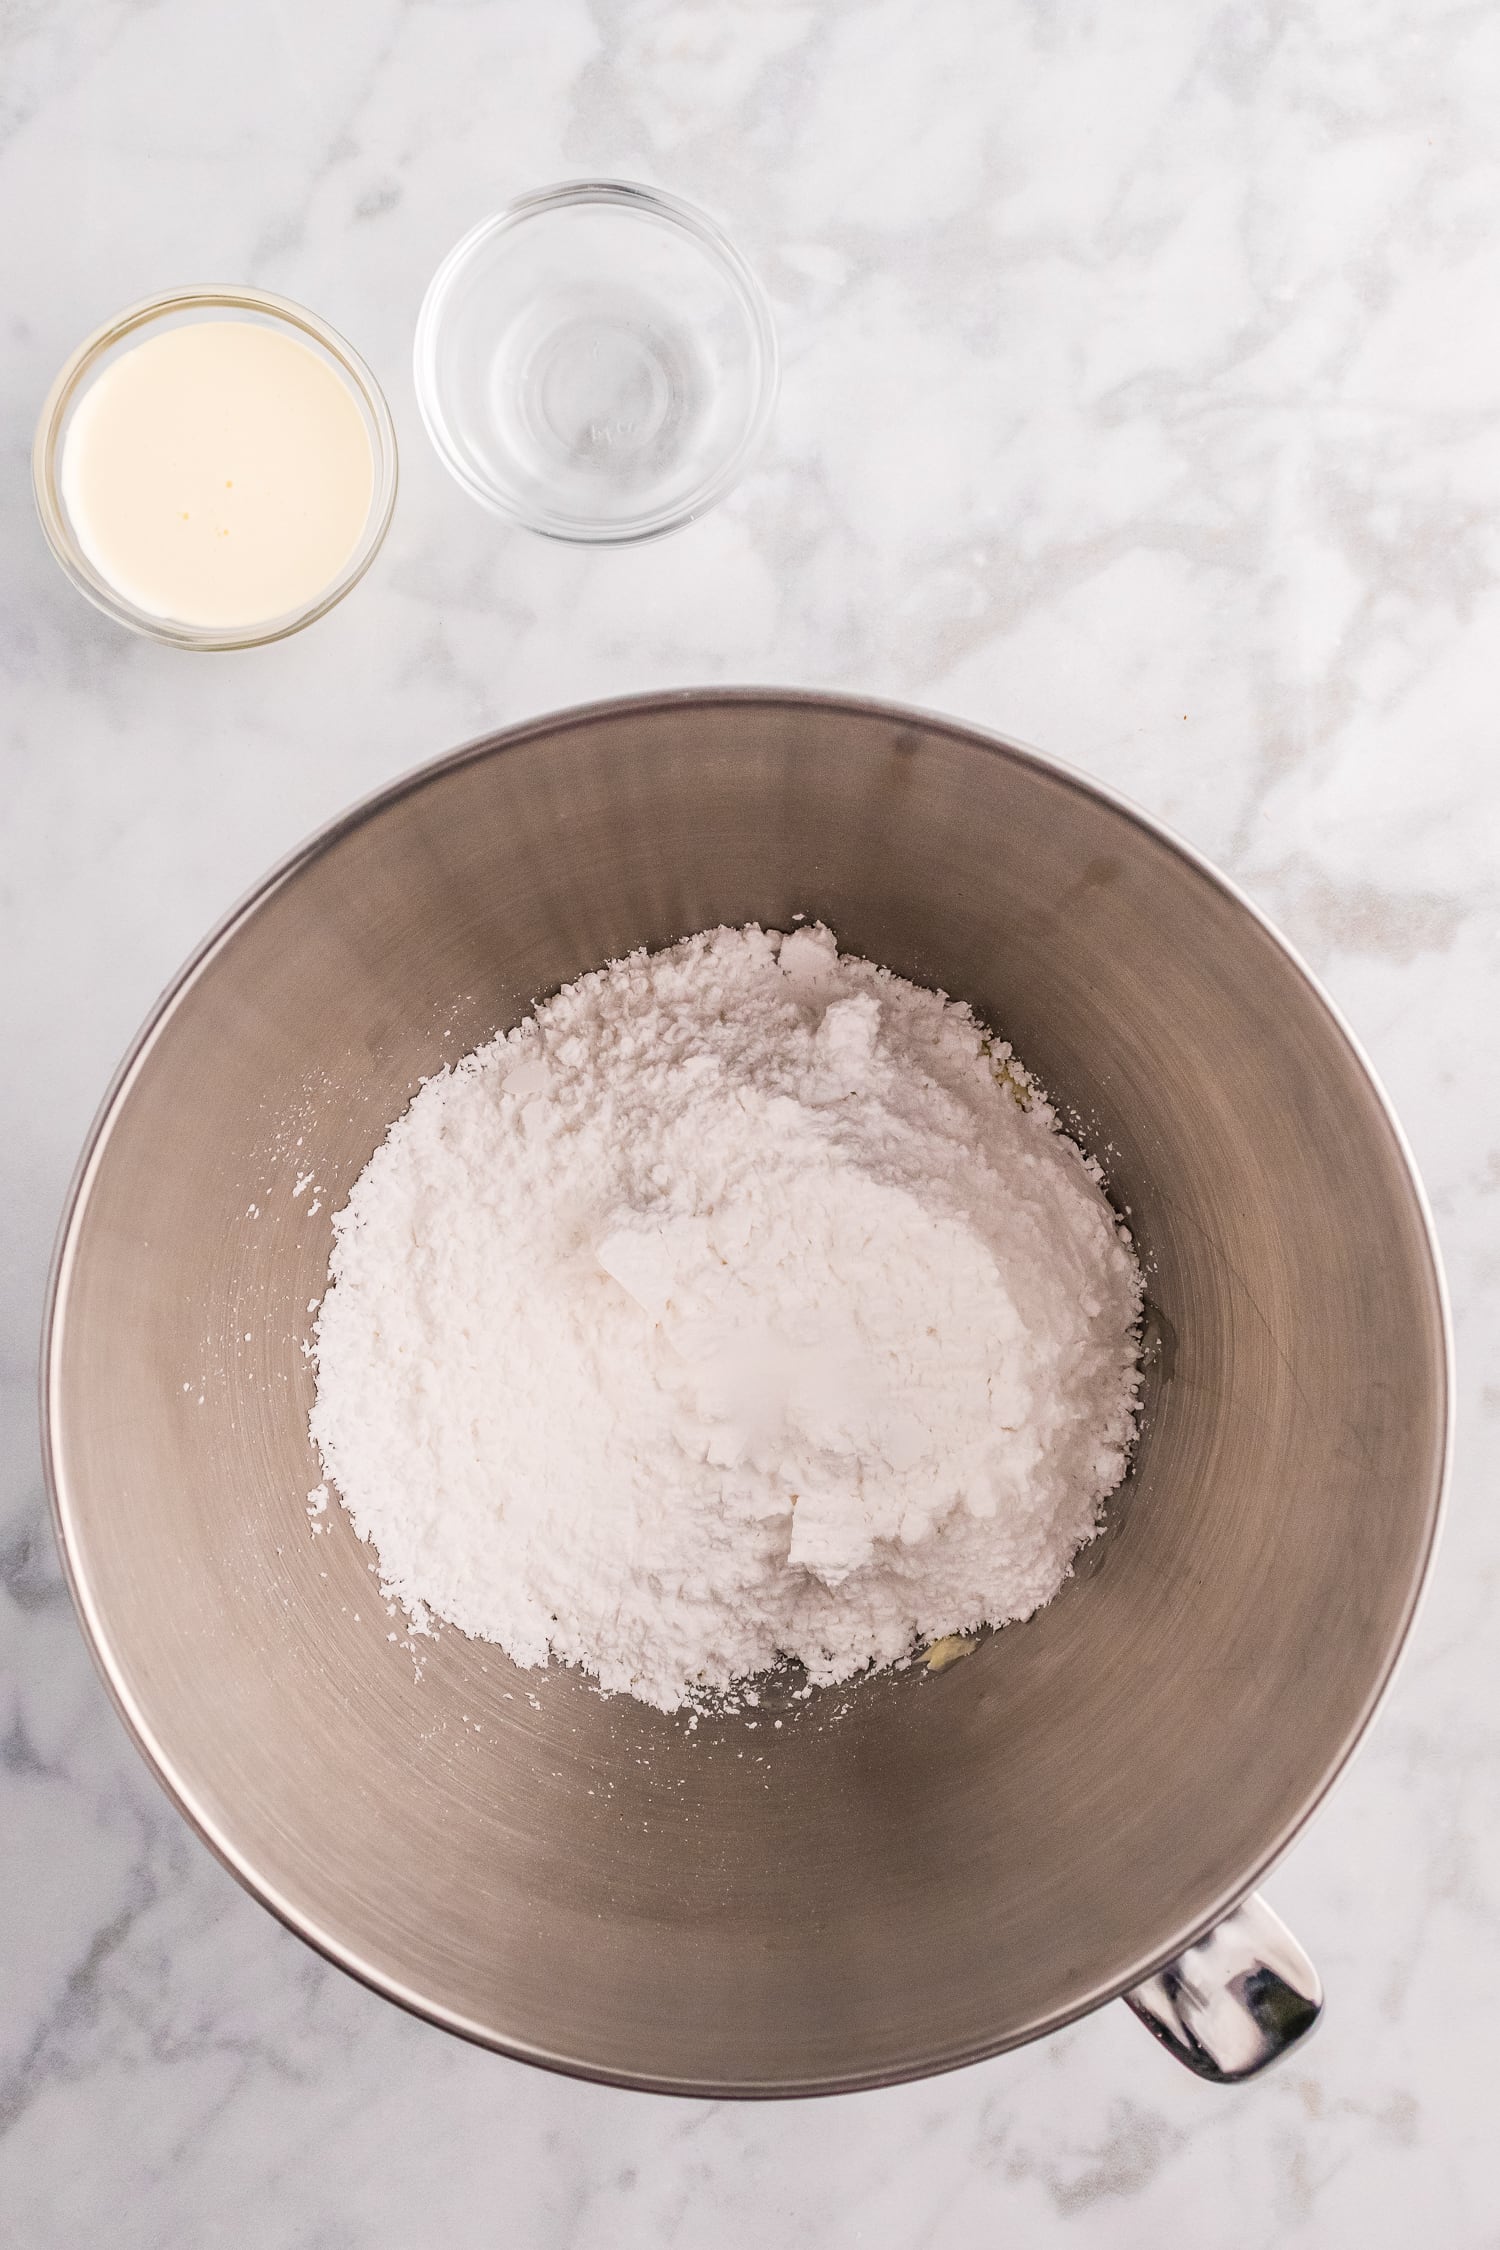 Powdered sugar in mixing bowl